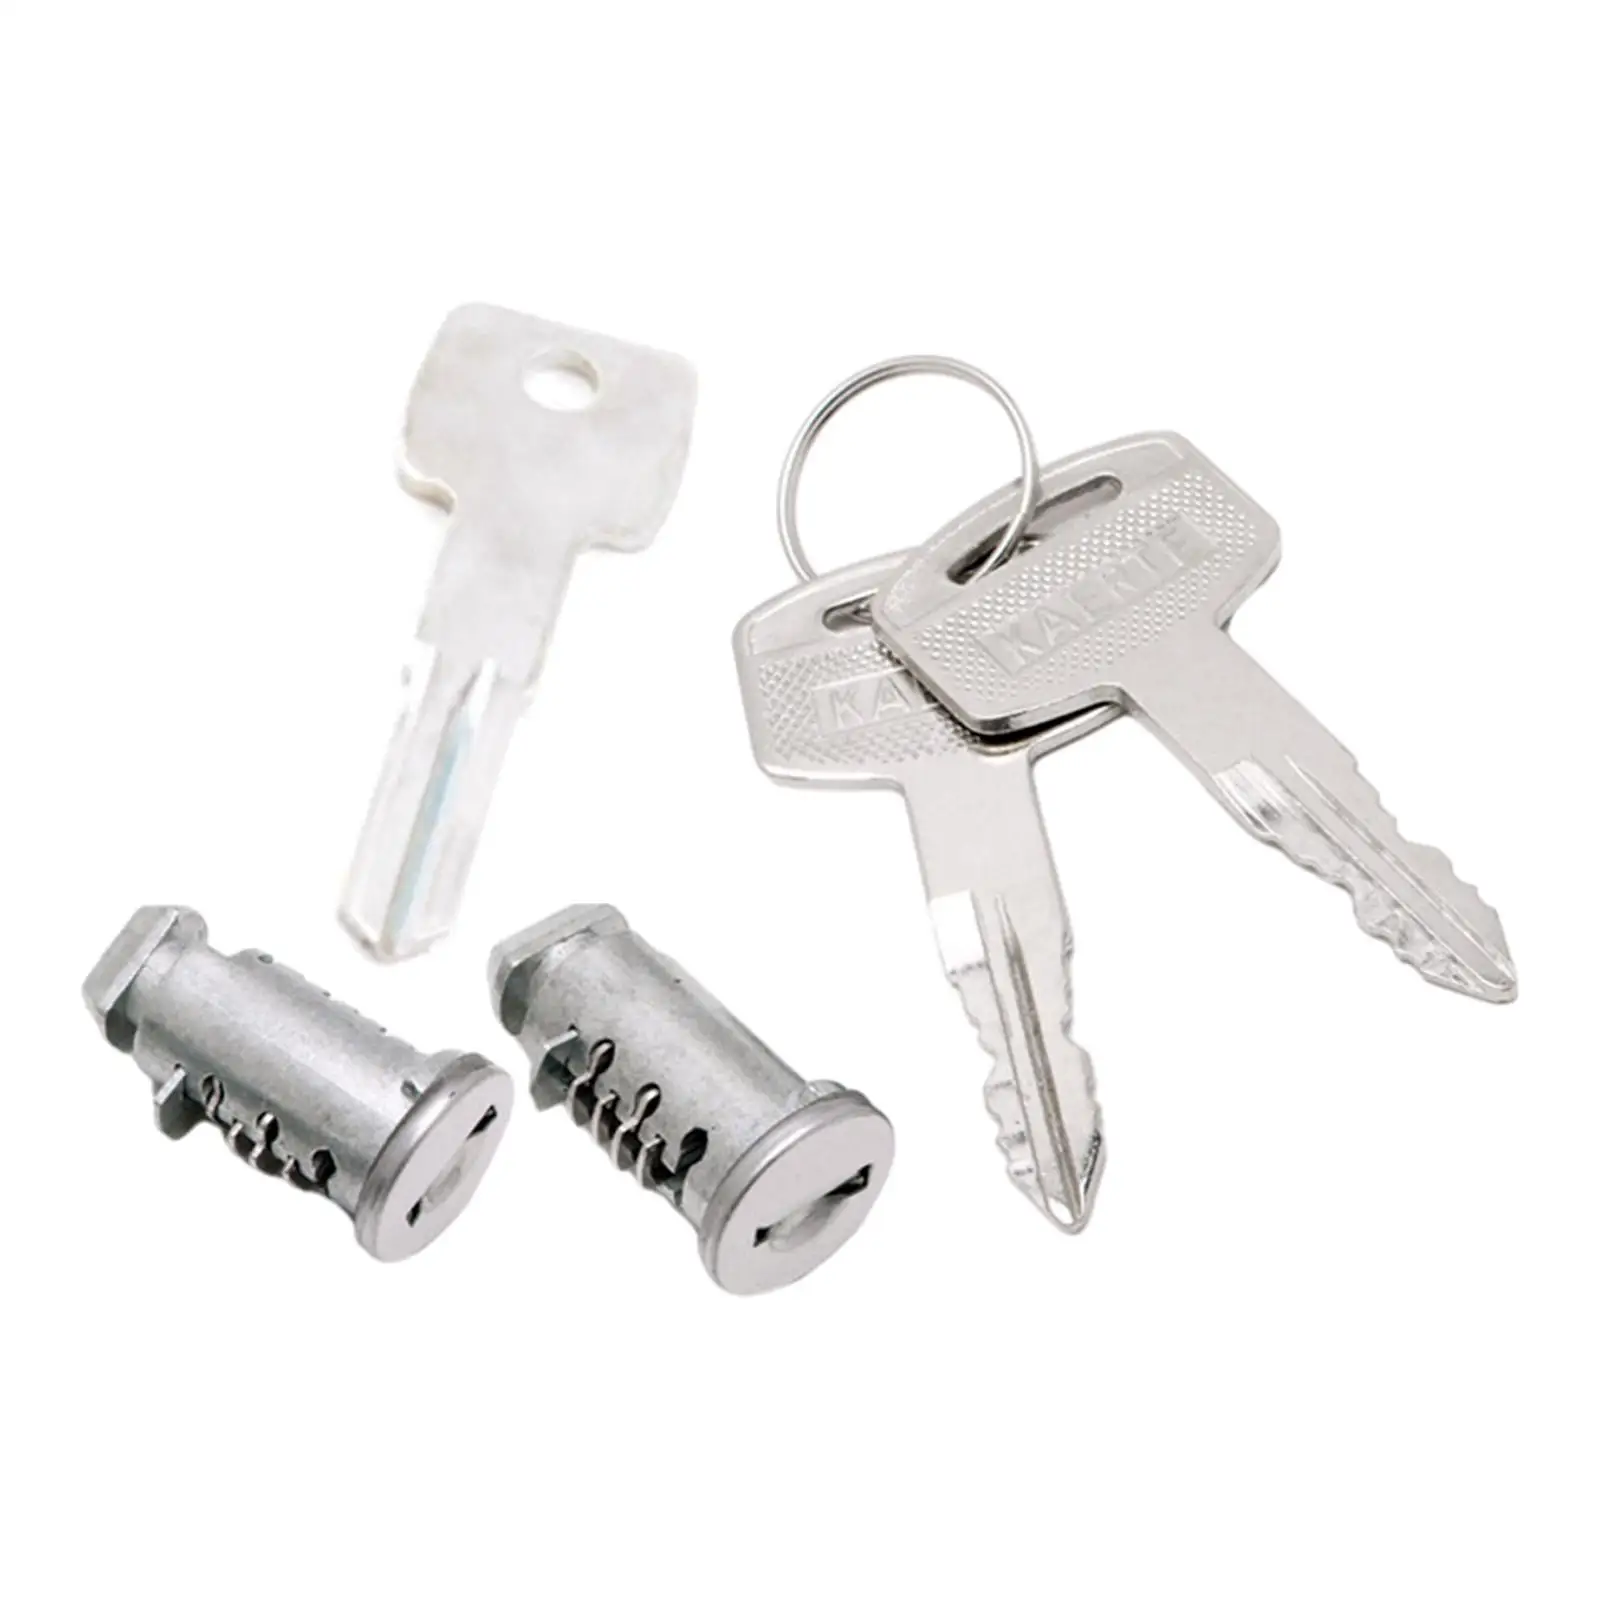 2Pcs Lock Cylindes Lock Cores, Accessory, Roof Rack Cross Bars Lock Key Kit Cargo Bar Lock with Key for SUV Car Rack Locks